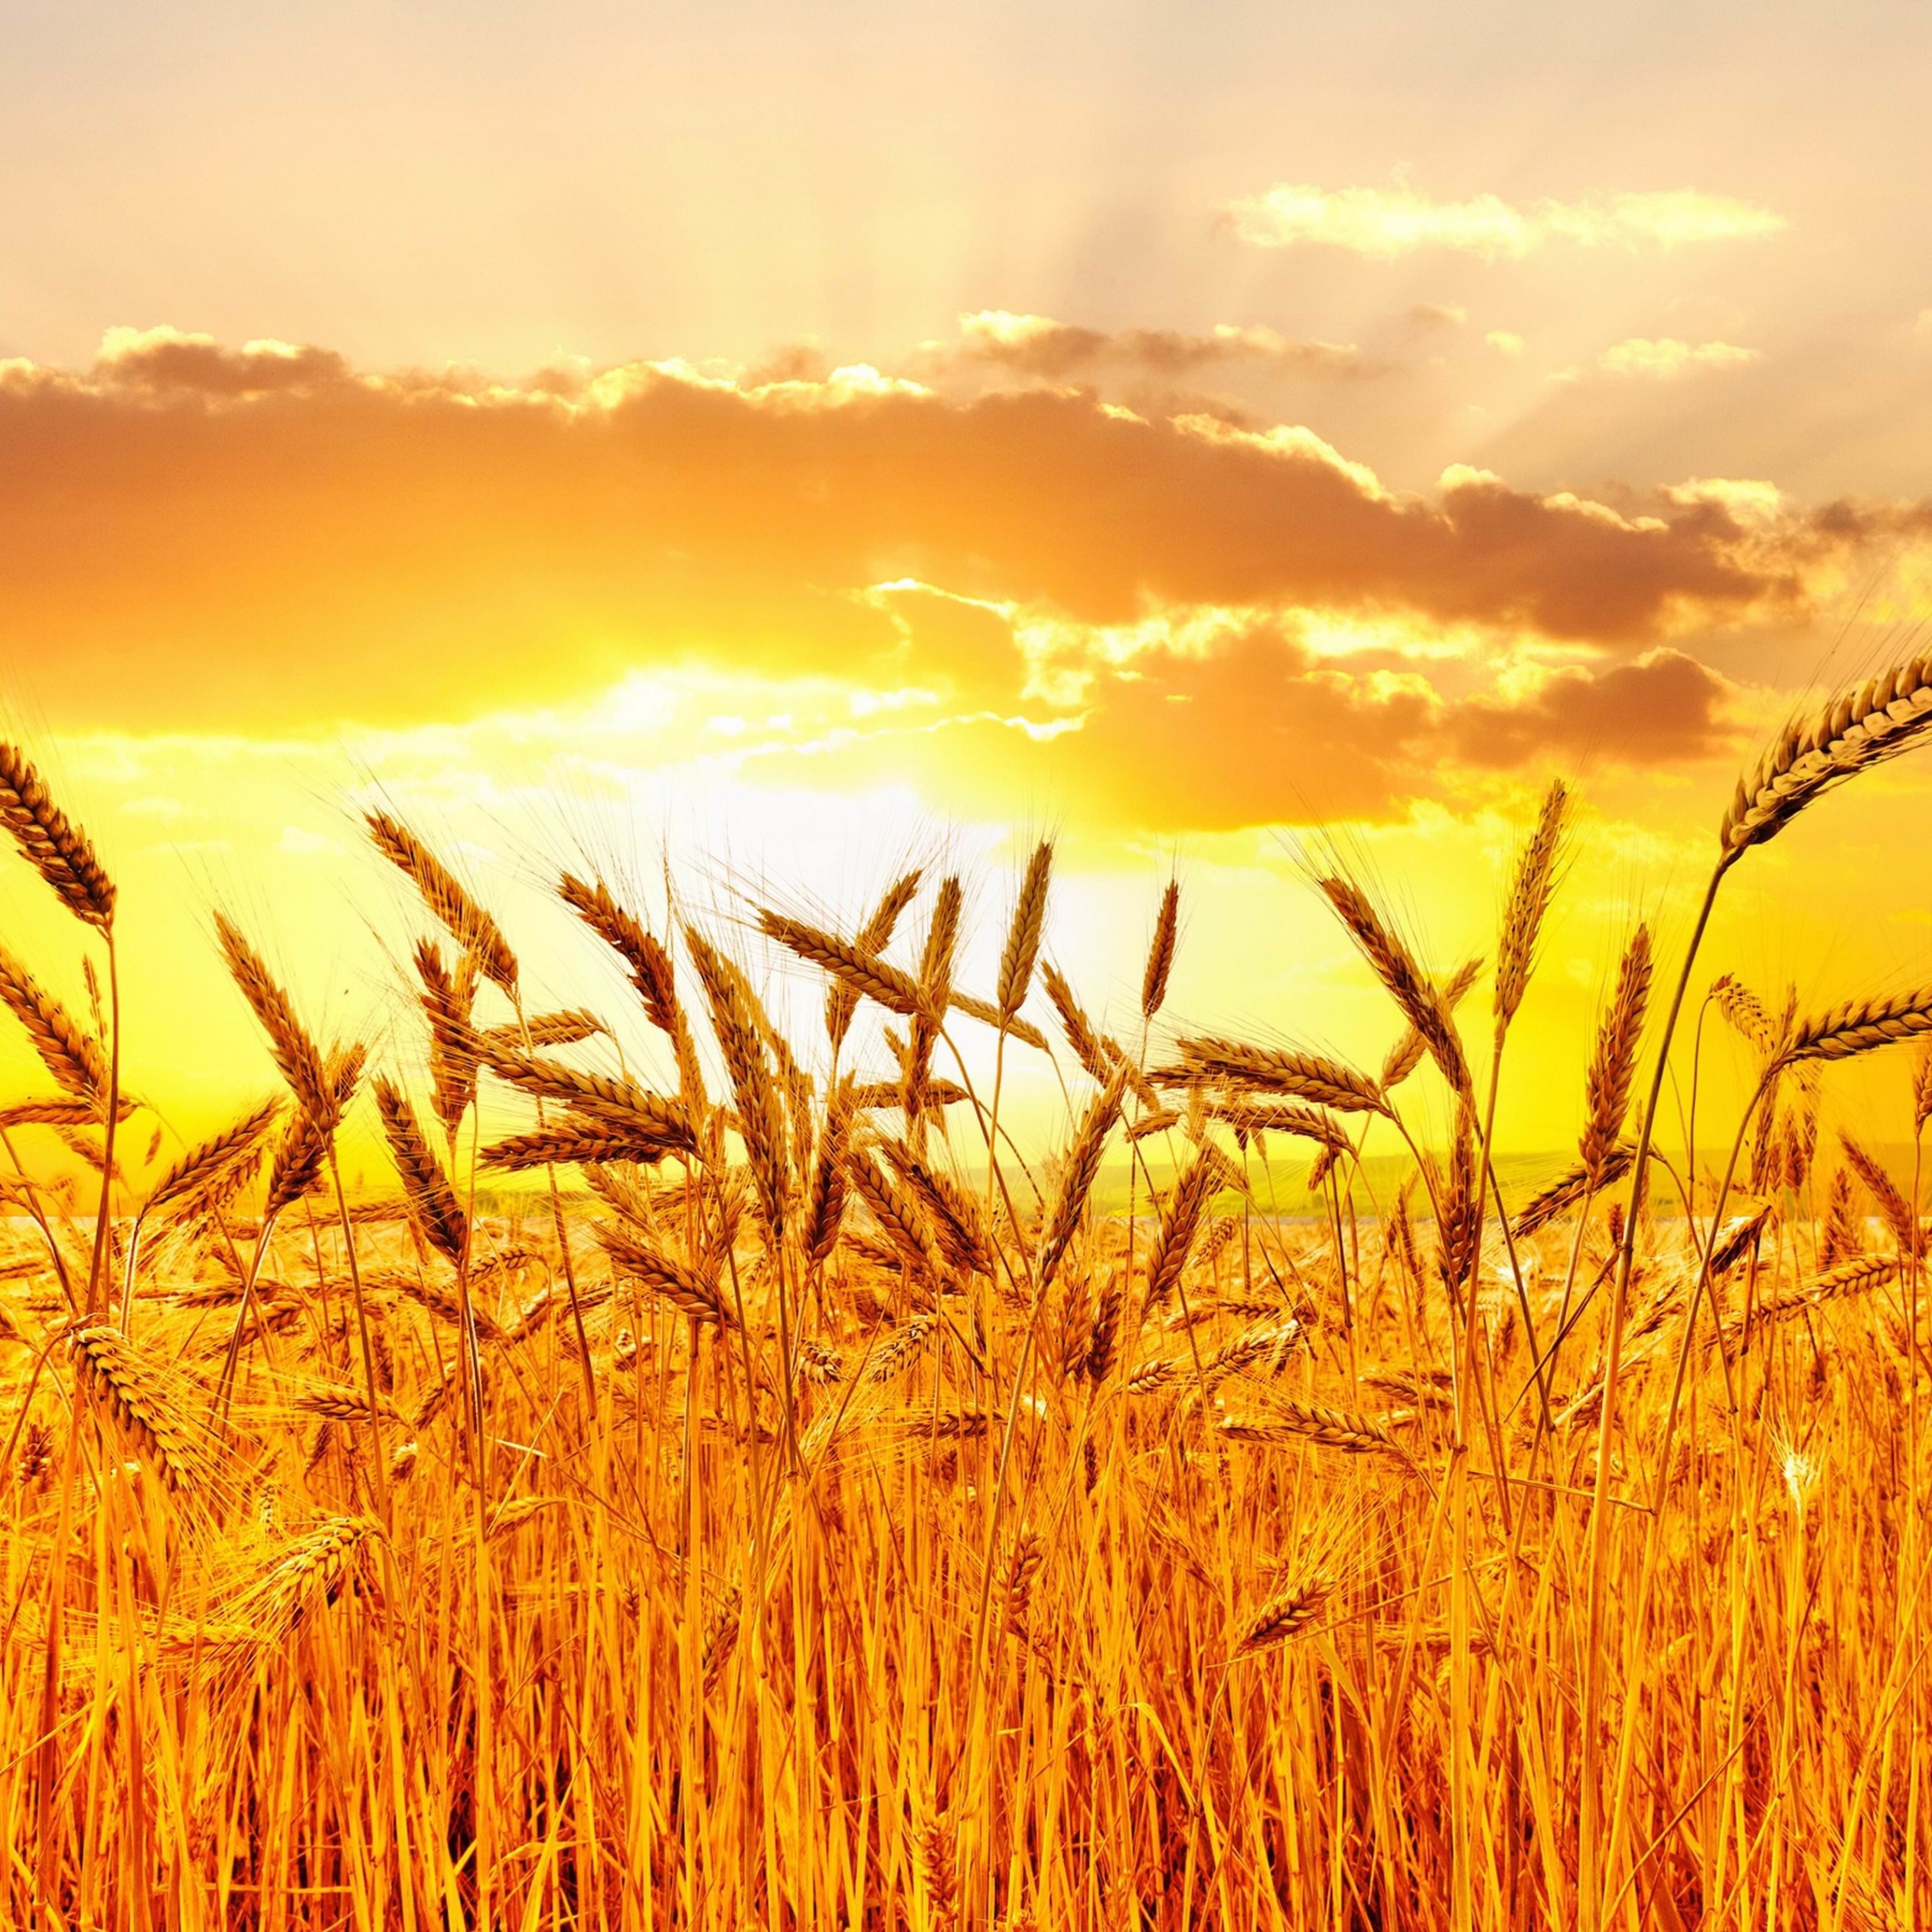 Golden Wheat Field At Sunset Wallpaper for Apple iPad mini 2